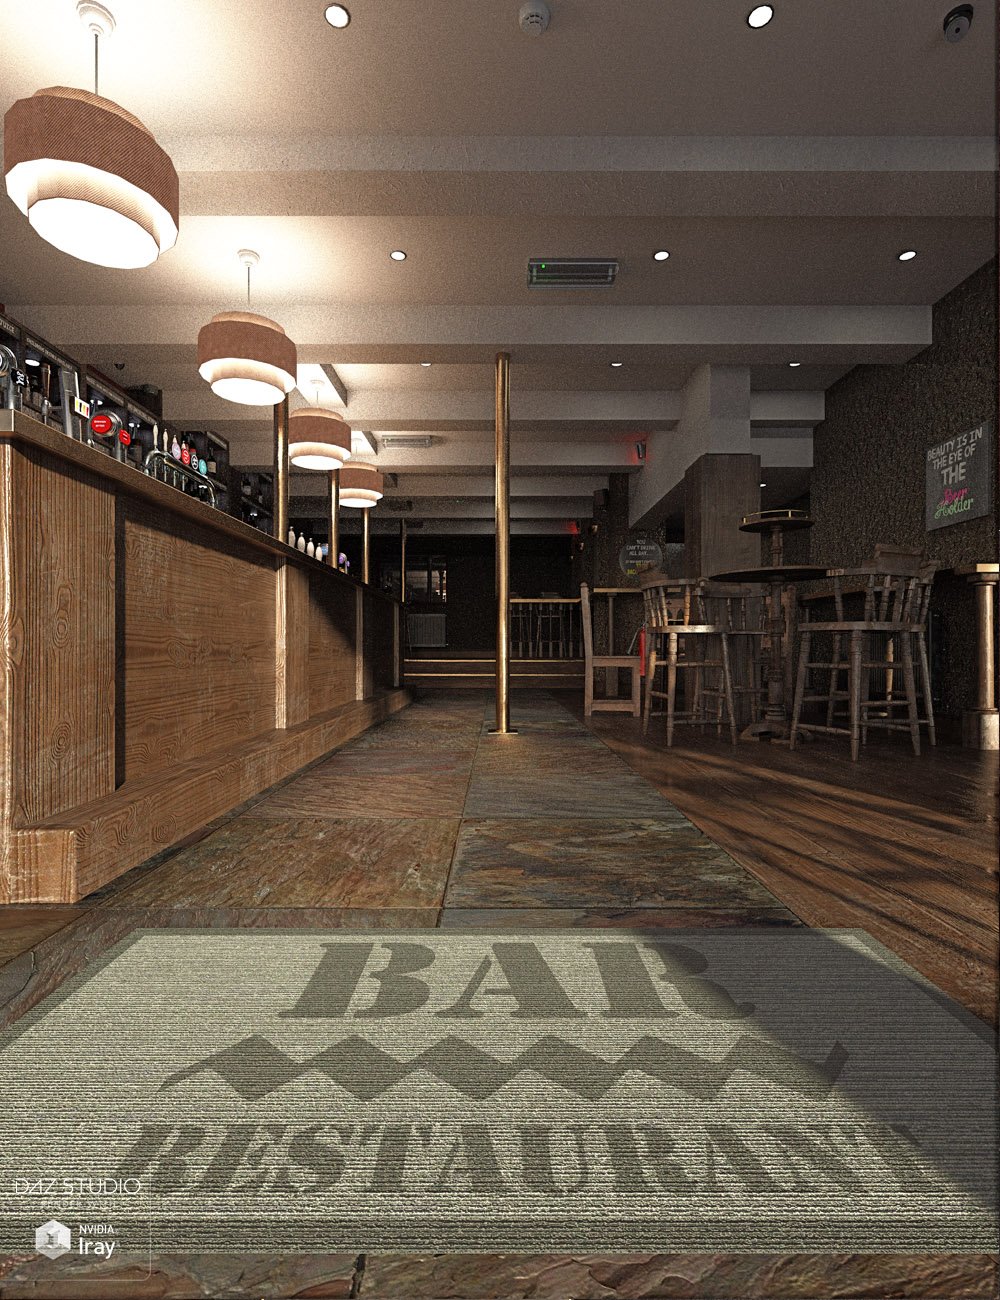 Trendy City Bar by: ForbiddenWhispersDavid Brinnen, 3D Models by Daz 3D